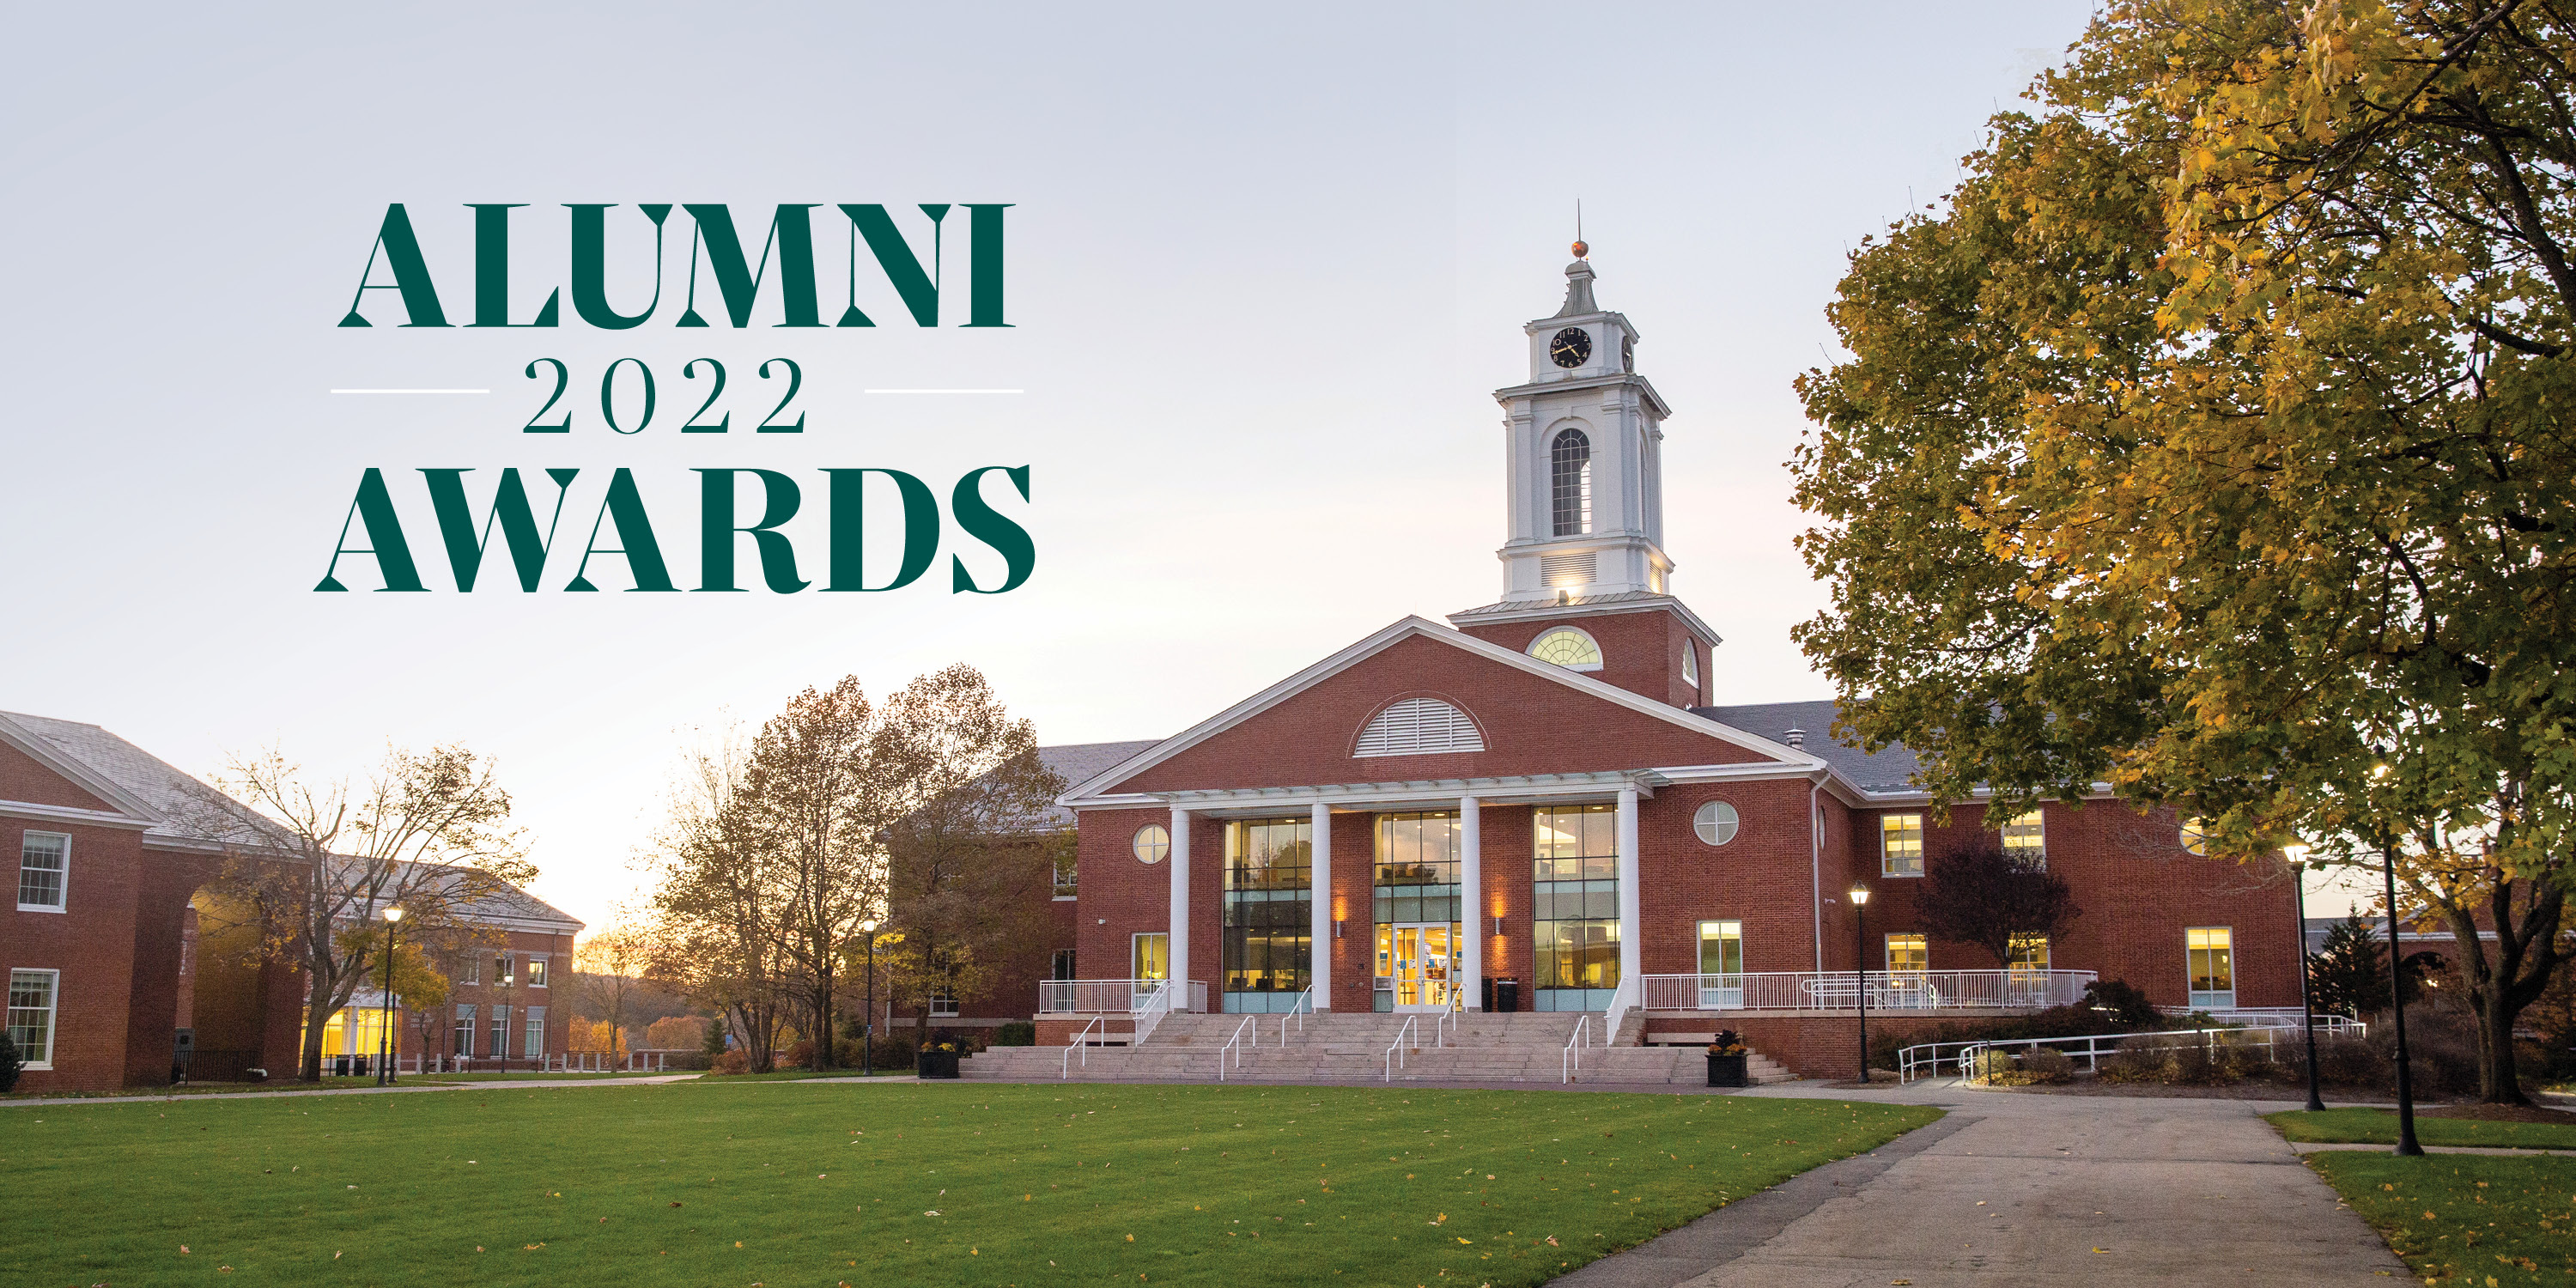 Alumni Achievement Award winners